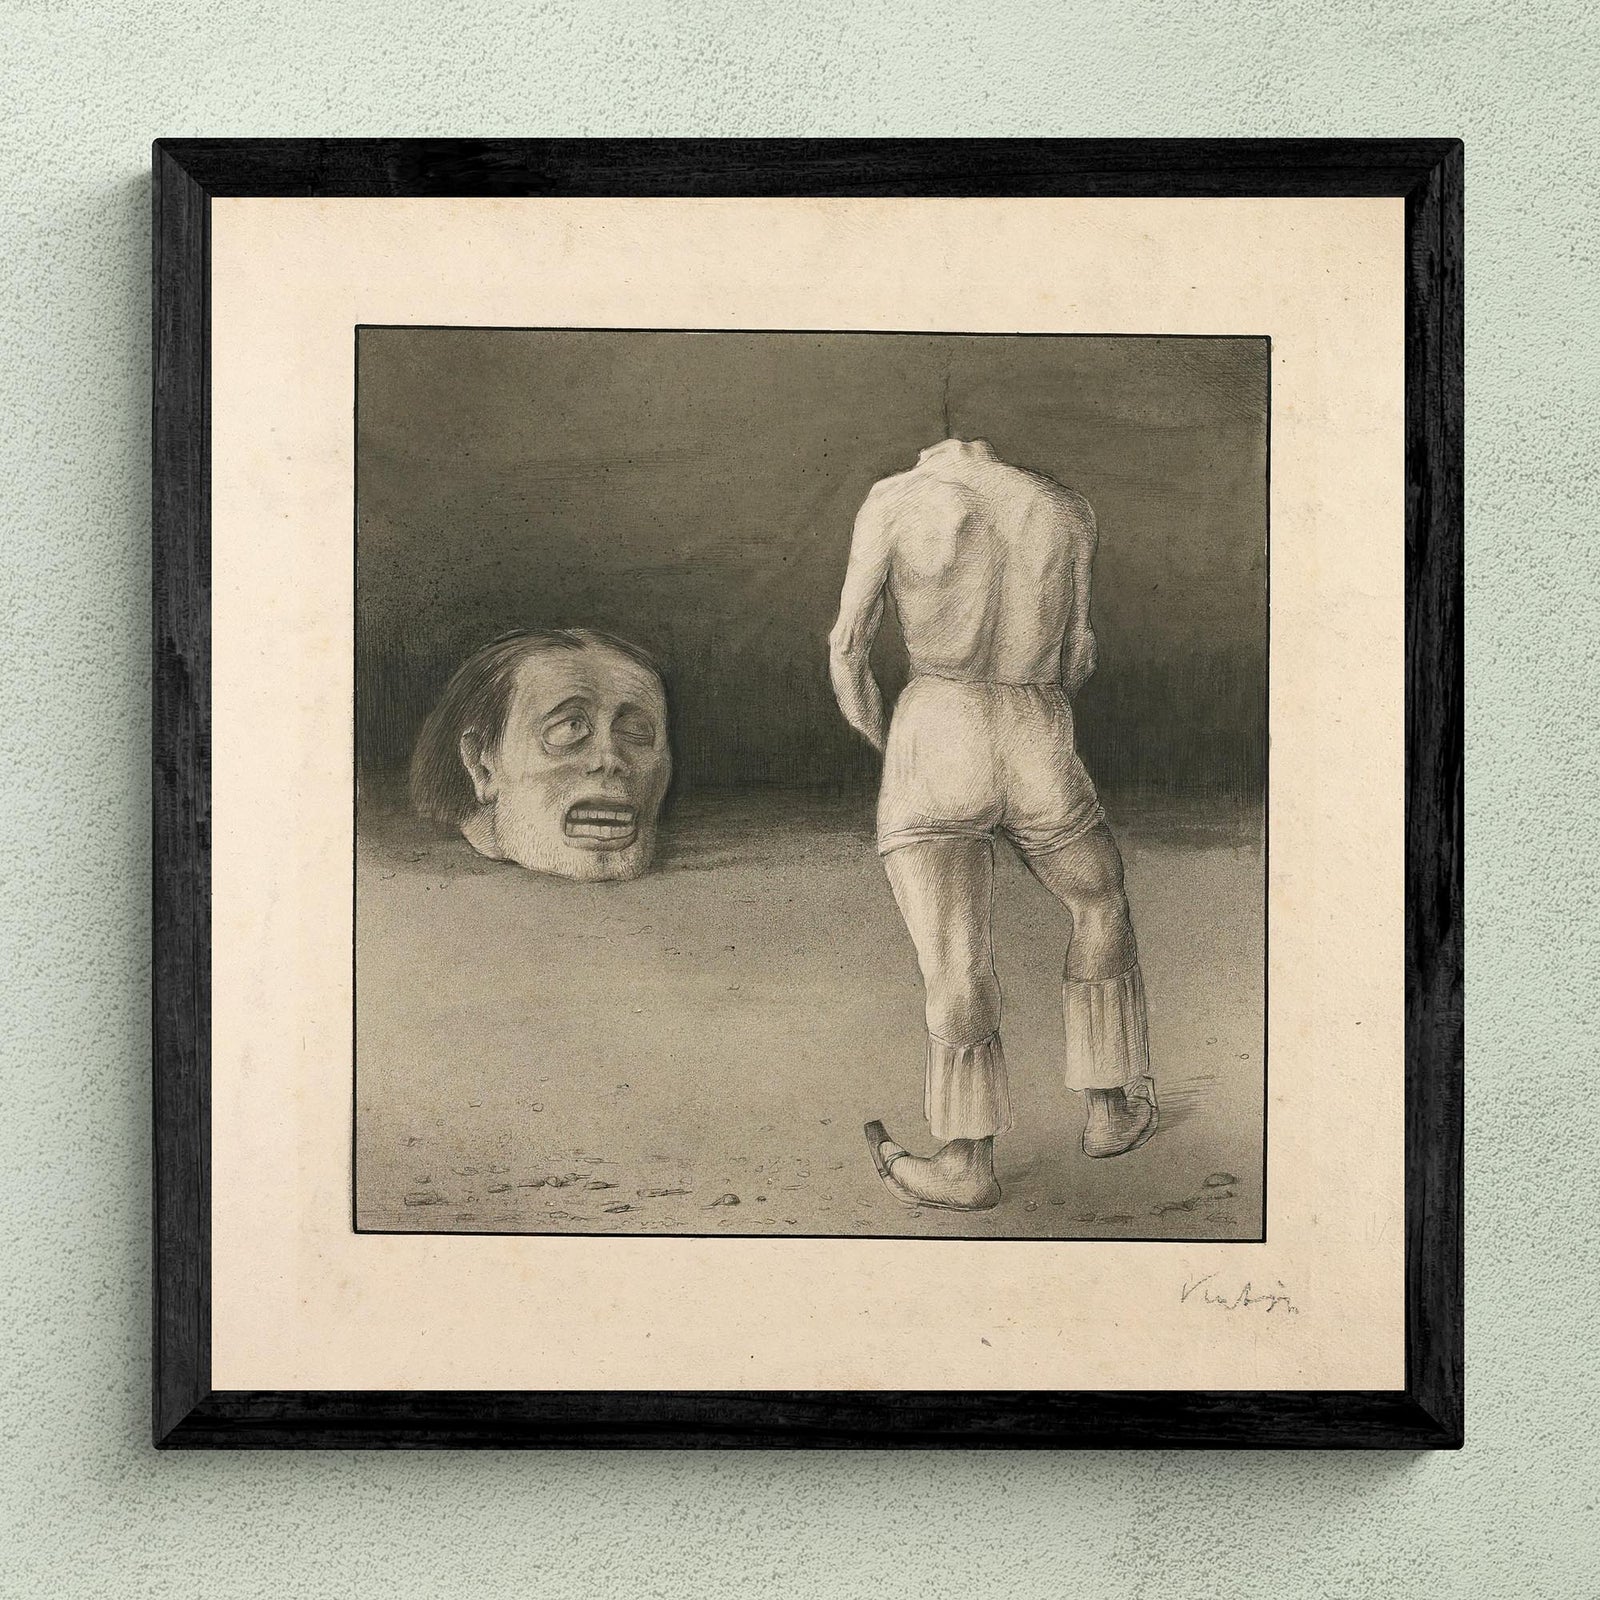 Fine art 6"x6" Alfred Kubin: Self Reflection, Mysterious Symbolist Art | Surreal Gothic Expressionist Fantasy Art | Strange Macabre Vintage Giclée Fine Art Print